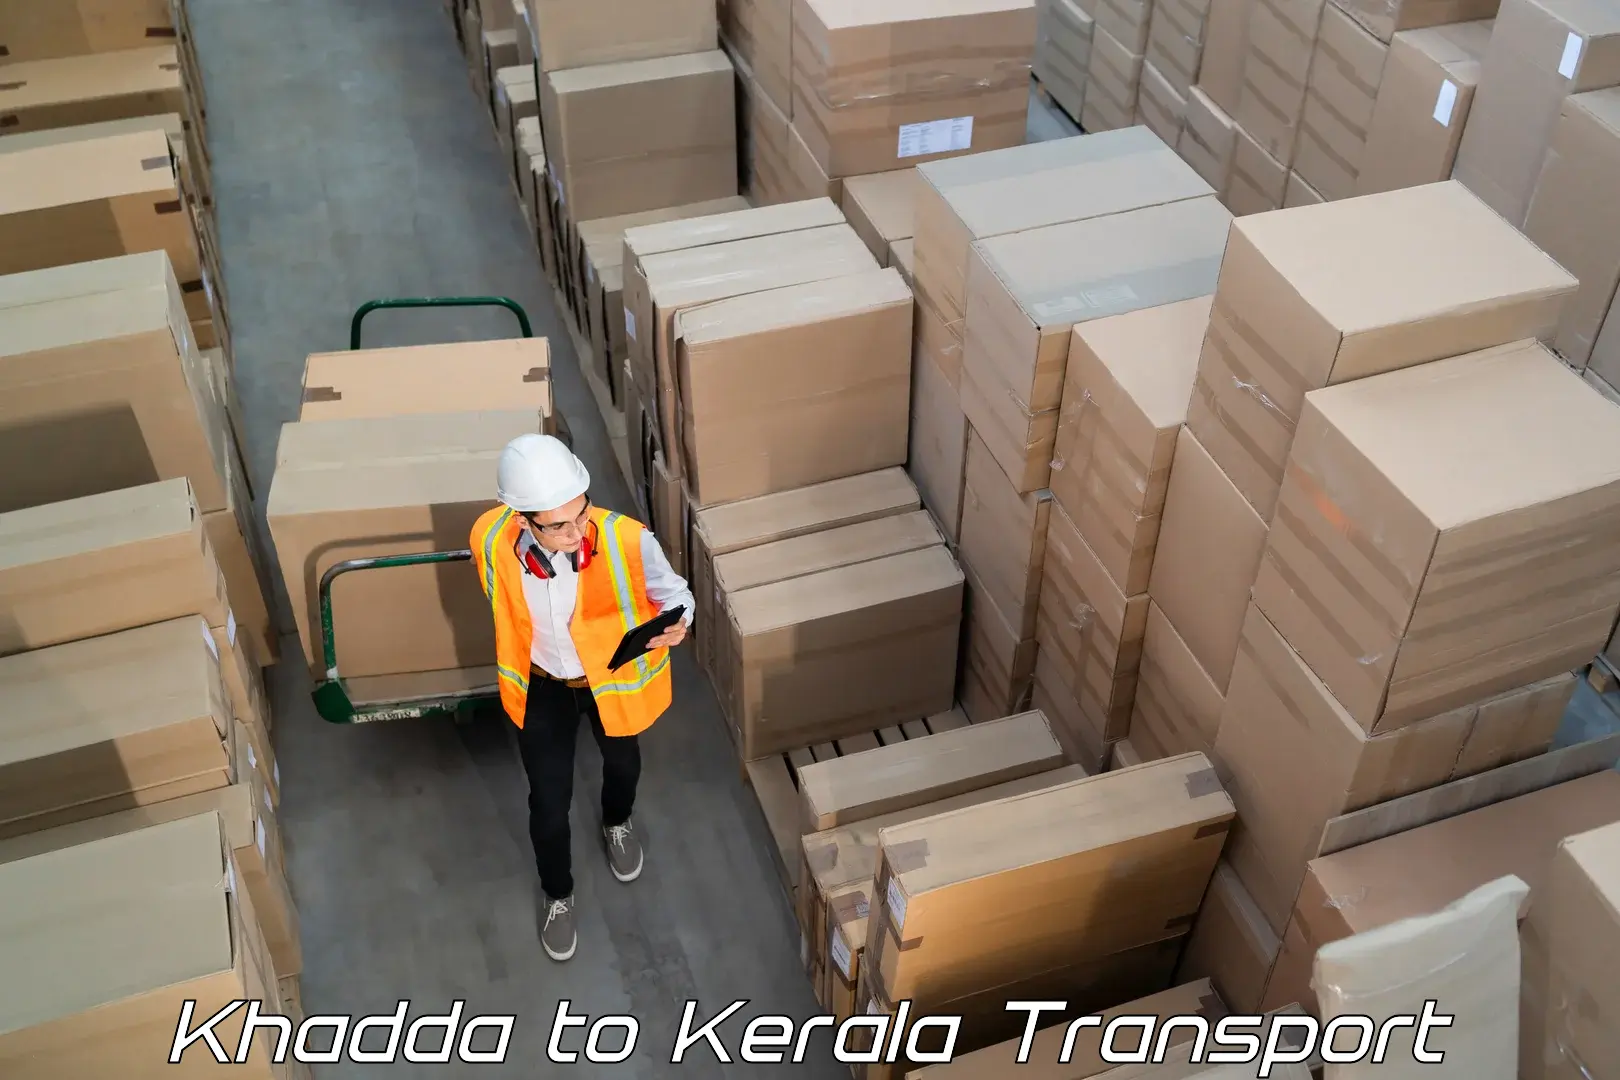 Shipping partner Khadda to Nochad